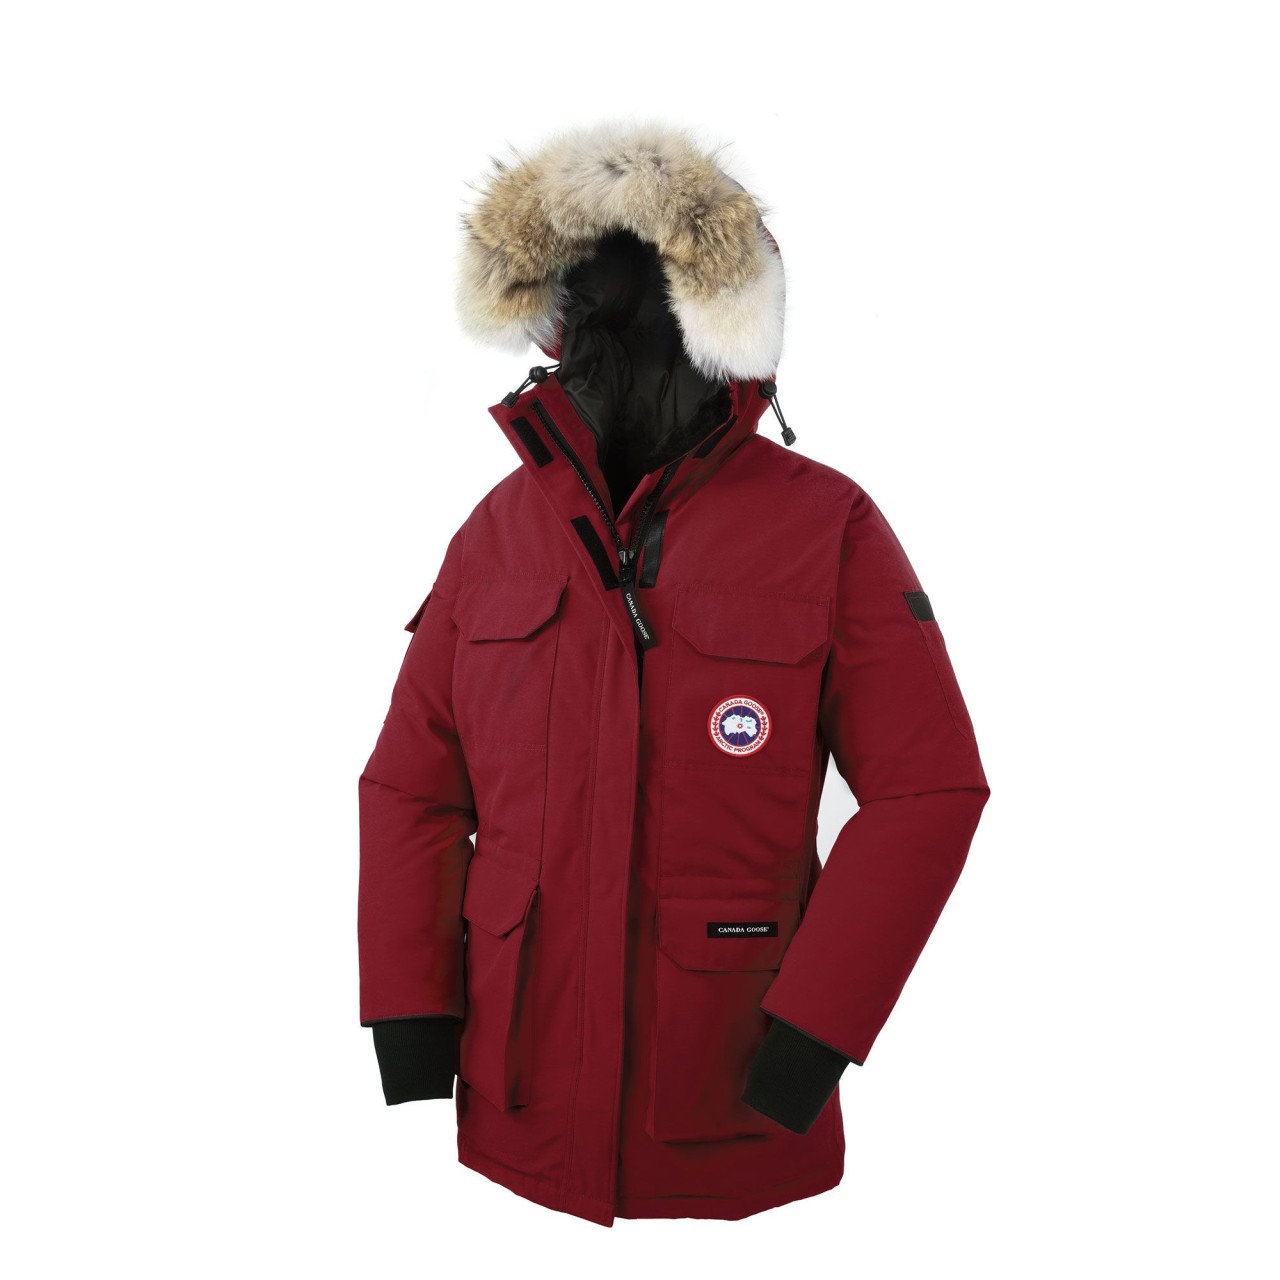 Canada Goose jackets online store - canada goose jacket sale | canada goose jackets outlet store